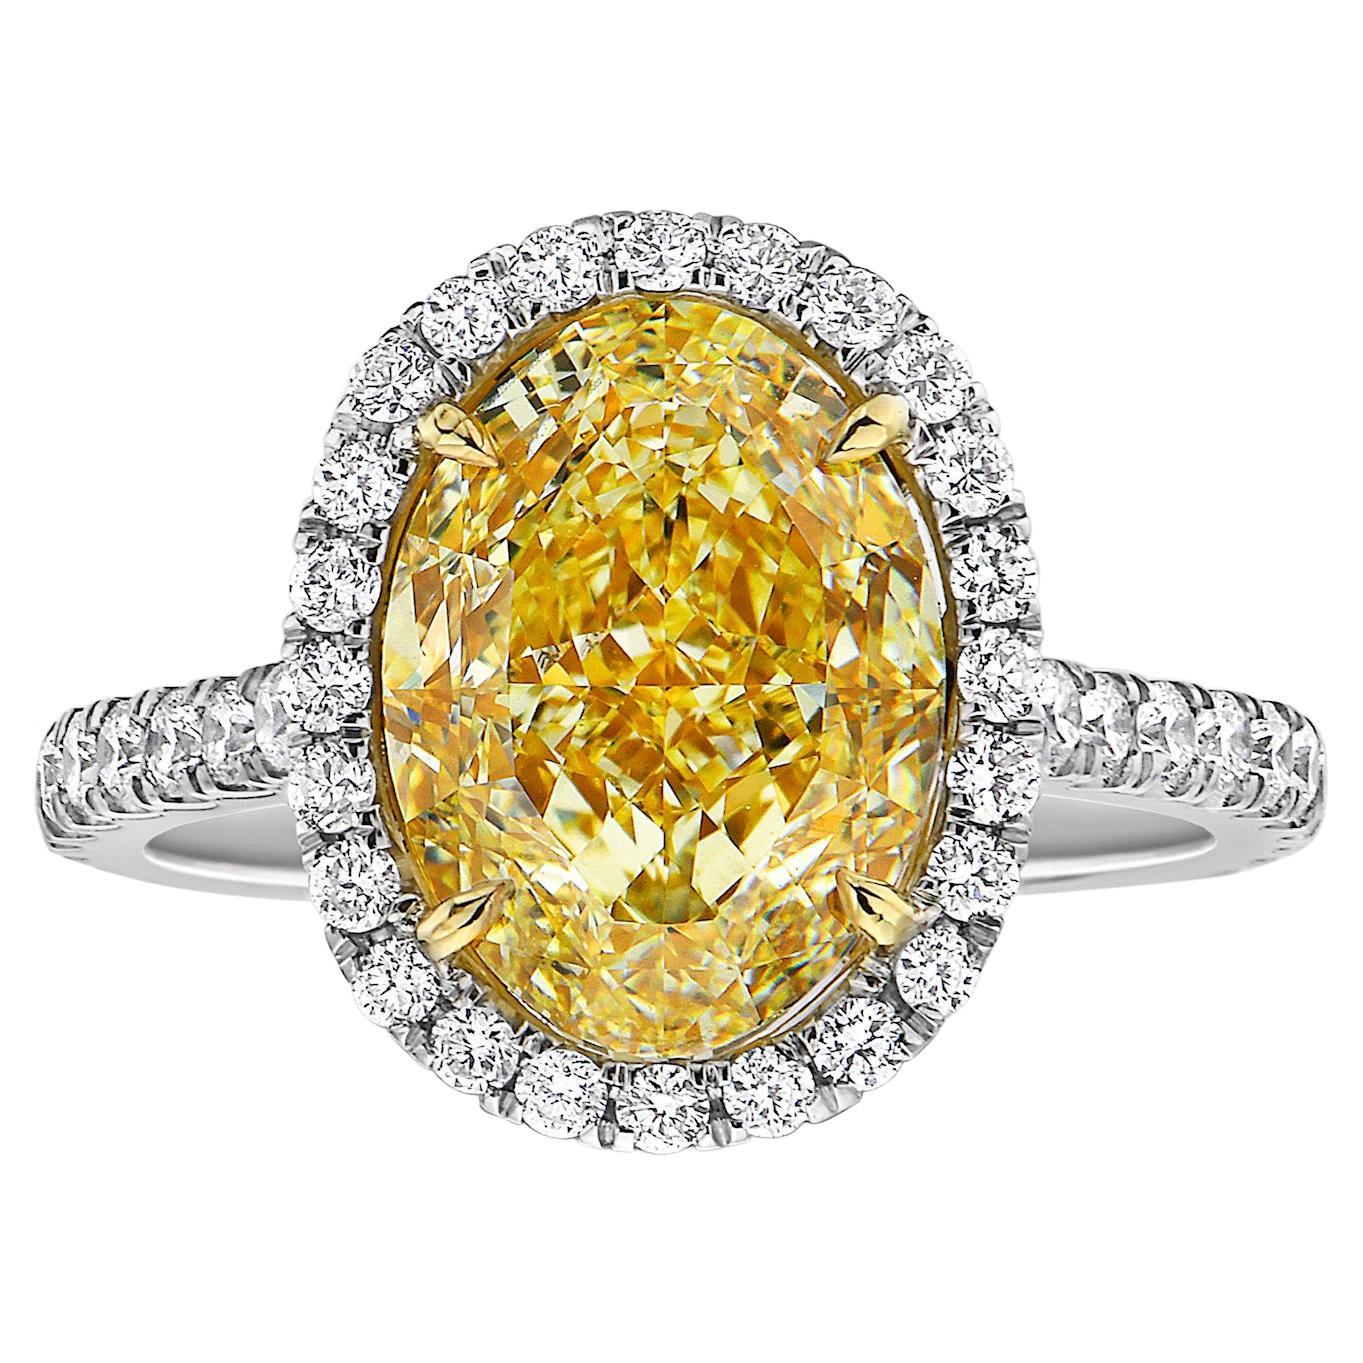 5 Carat VS1 Light Yellow Oval Halo Diamond Ring